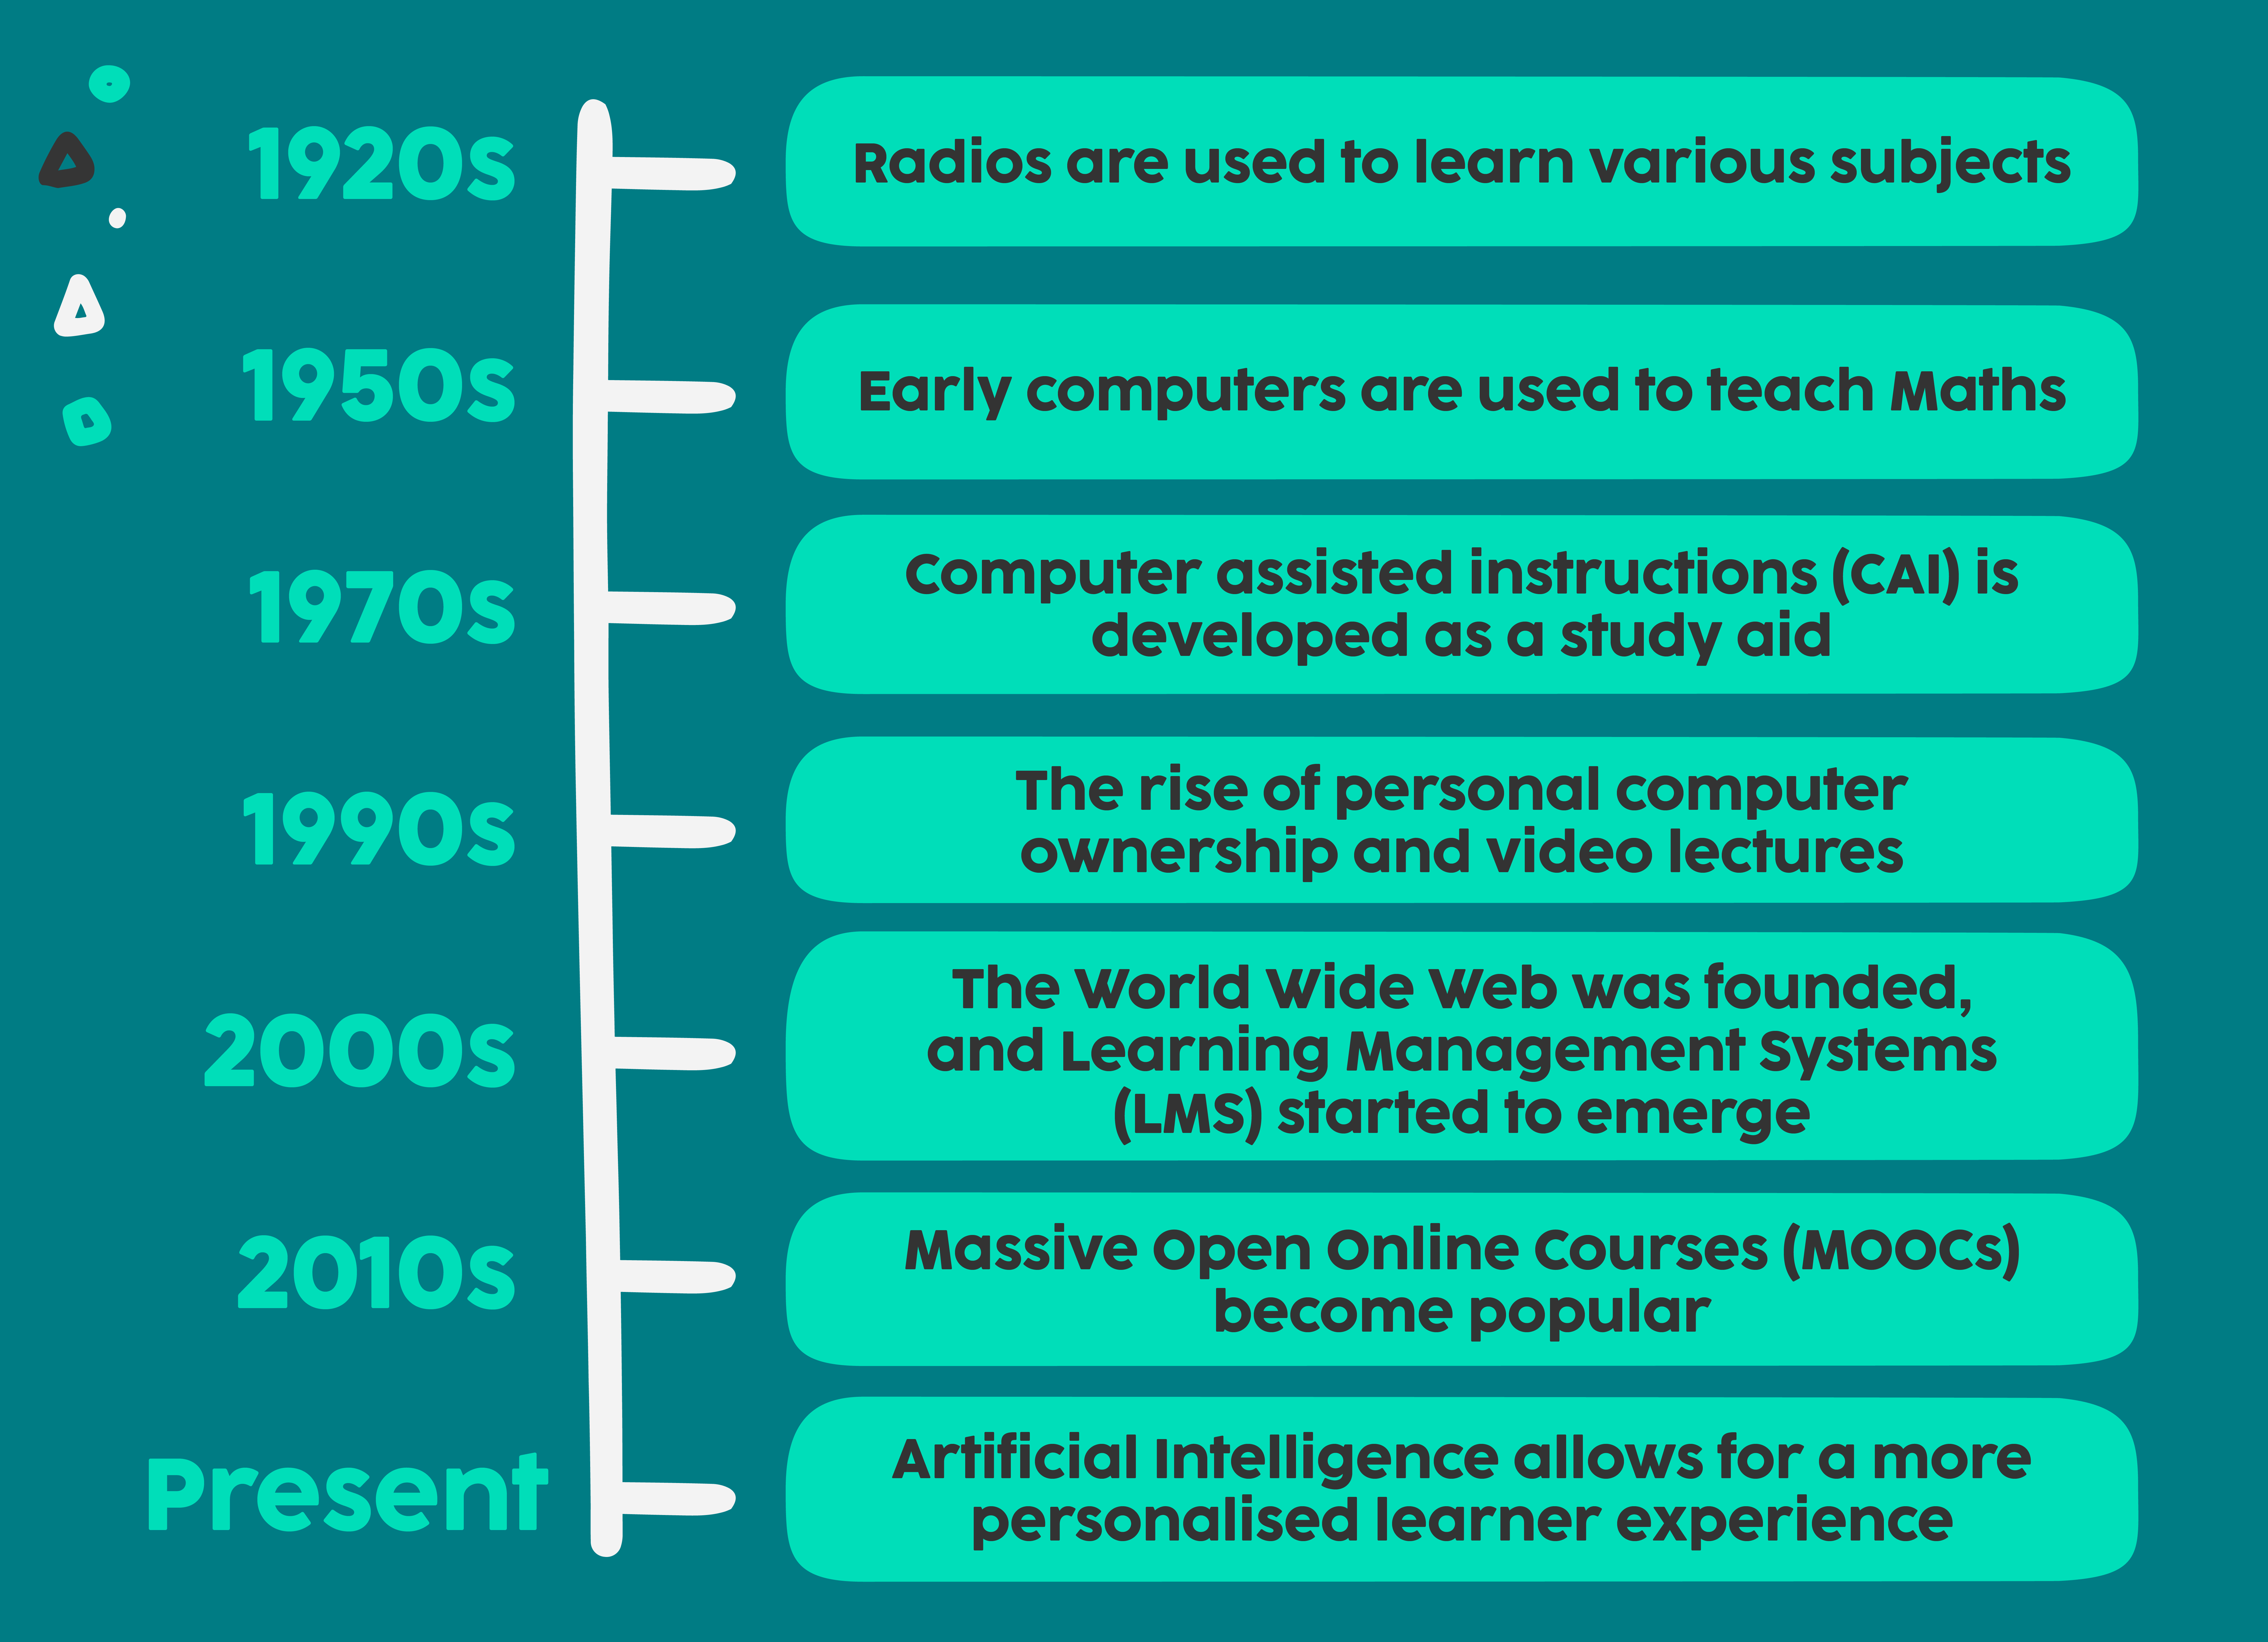 timeline of eLearning 1920-present